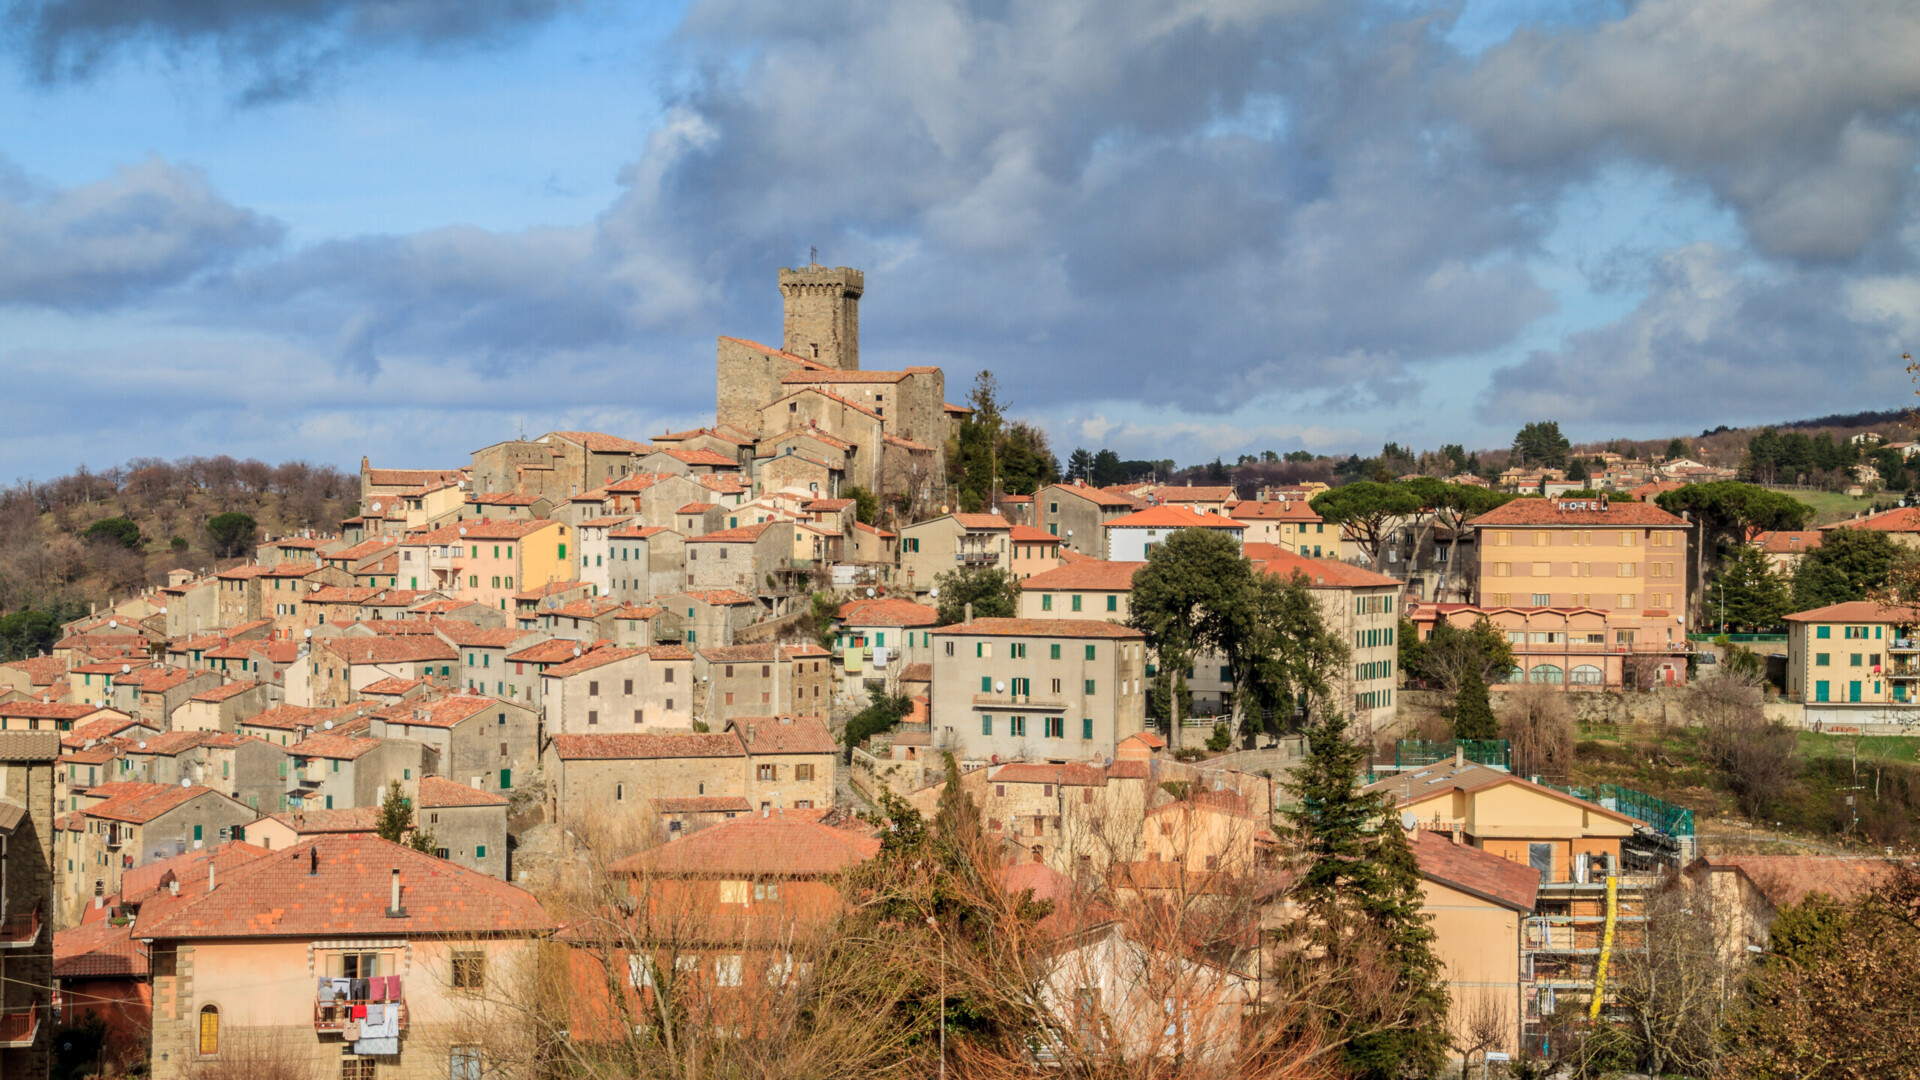 Arcidosso: Medieval village on the slopes of Mount Amiata, Tuscany, Italy